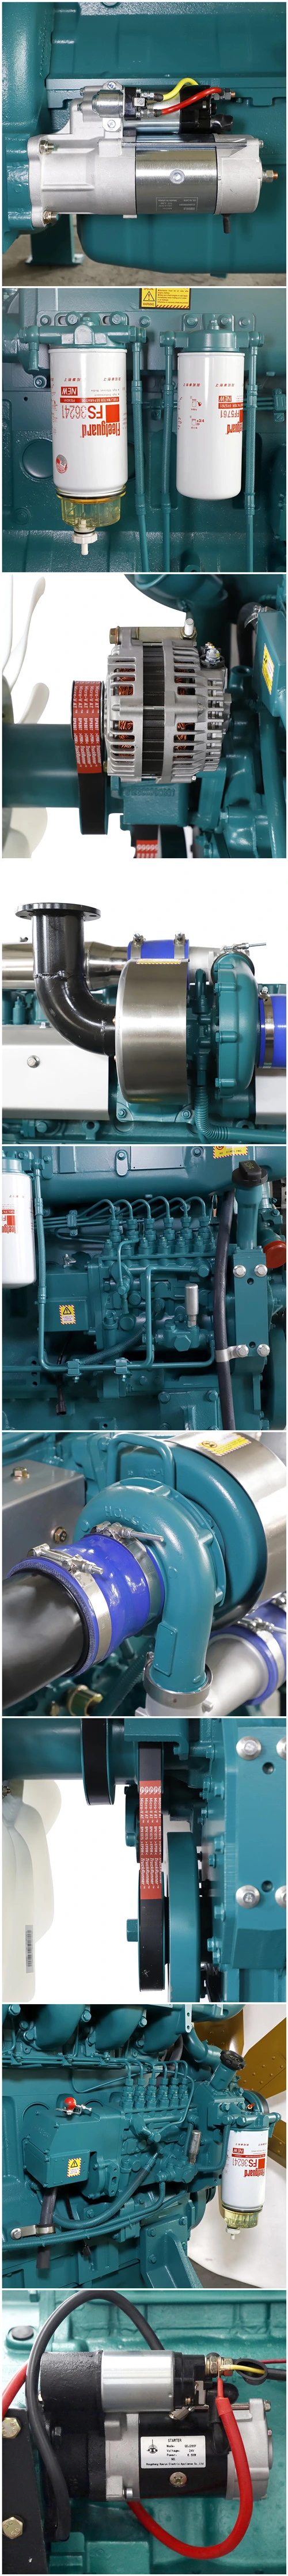 Hot Sale Multi-Cylinder Diesel Engine for Diesel Generator Set Four-Stroke